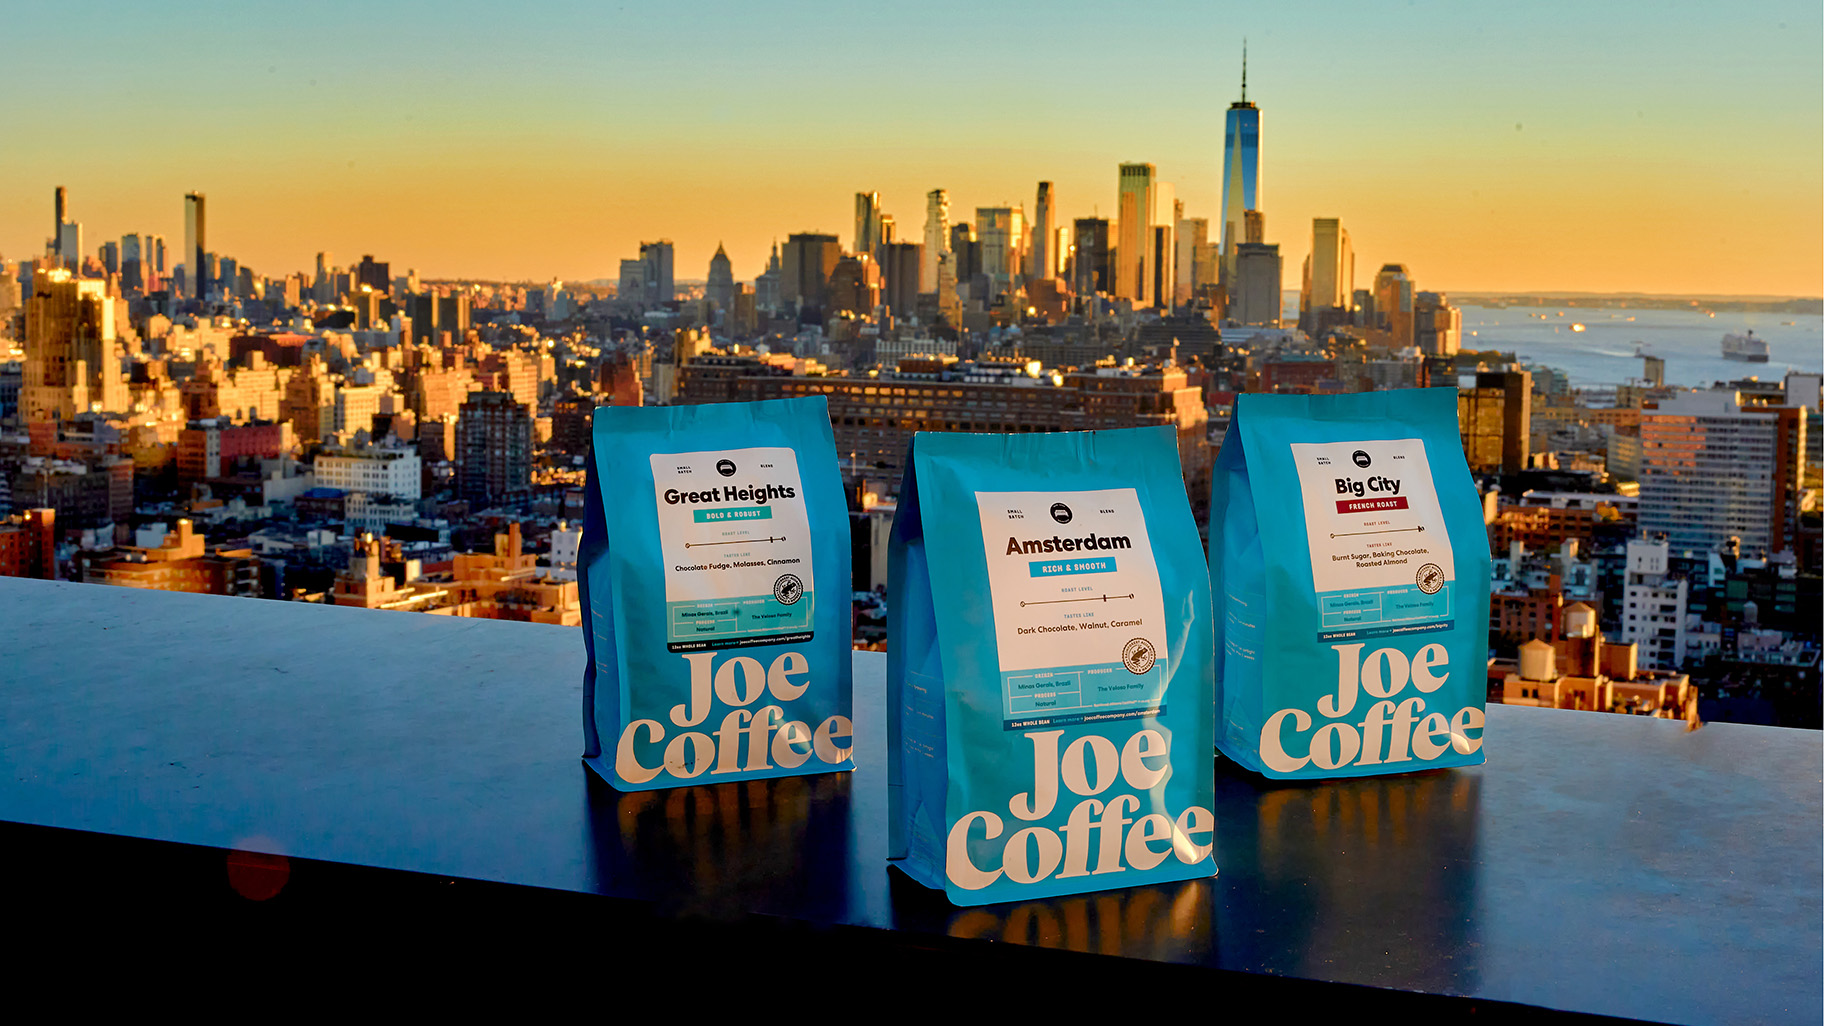 Joe Coffee Roaster Image